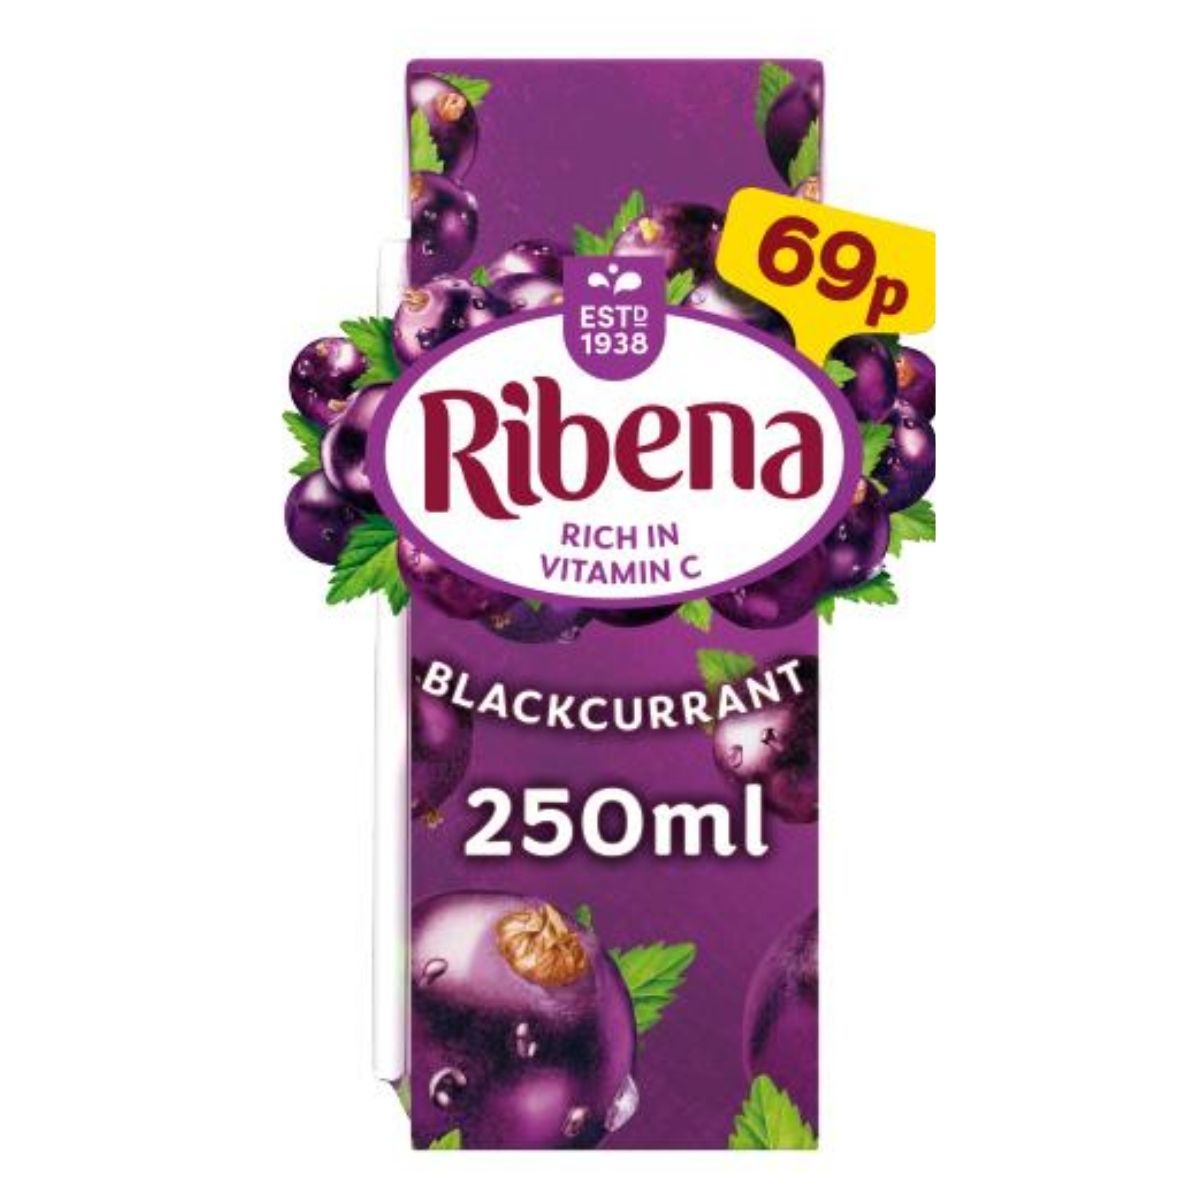 Ribena - Blackcurrant Juice Drink - 250ml.